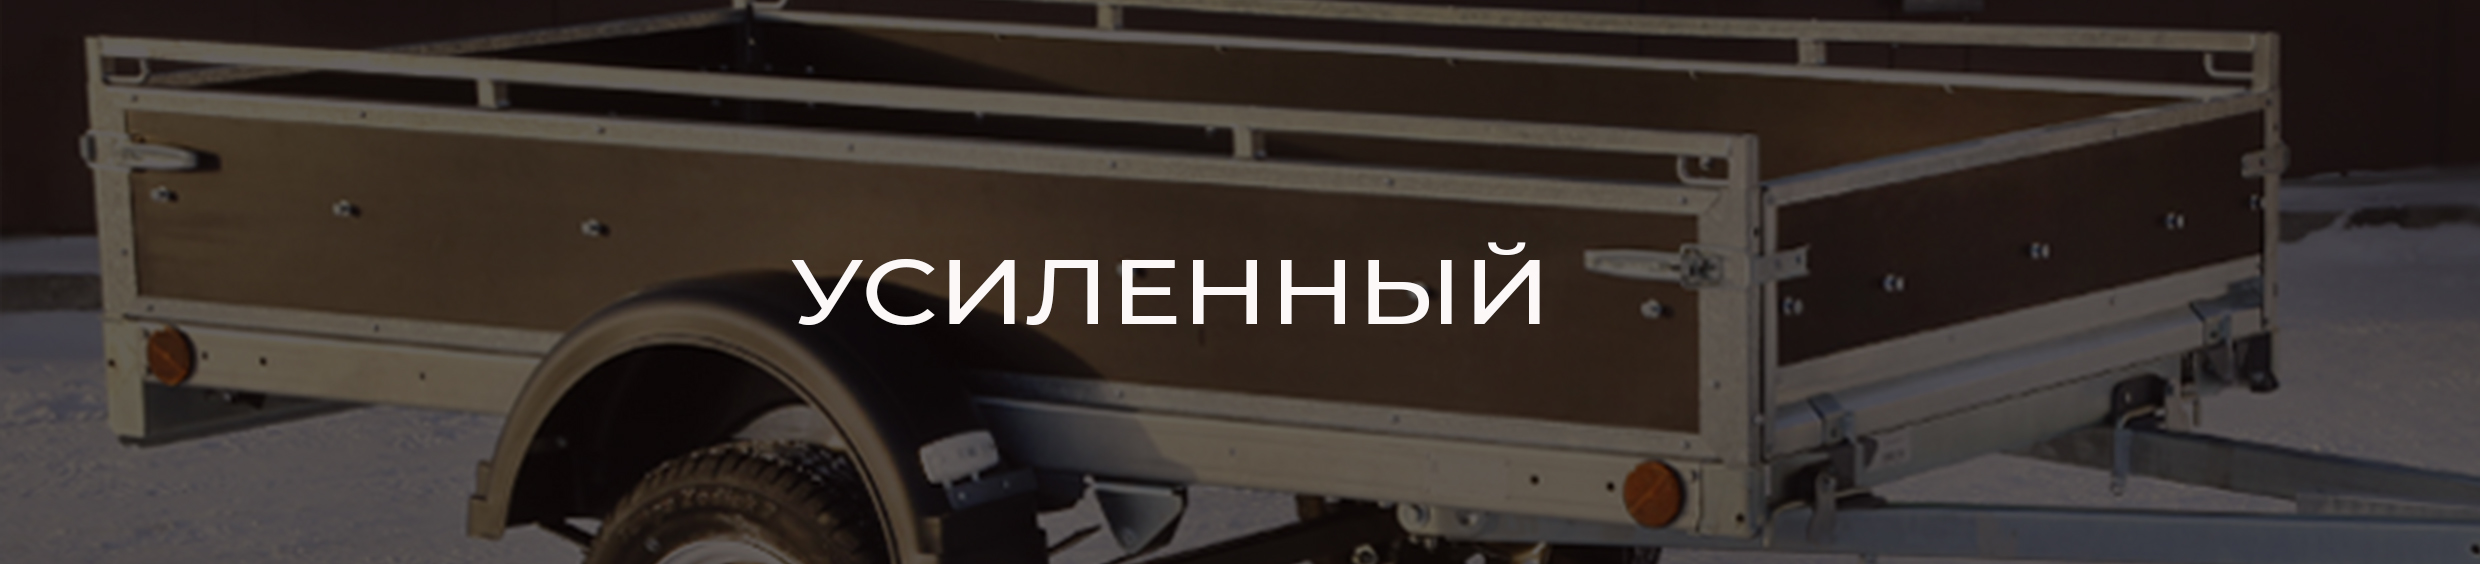 pricep16.ru новинка: Усиленные борта для "Крепыша"!